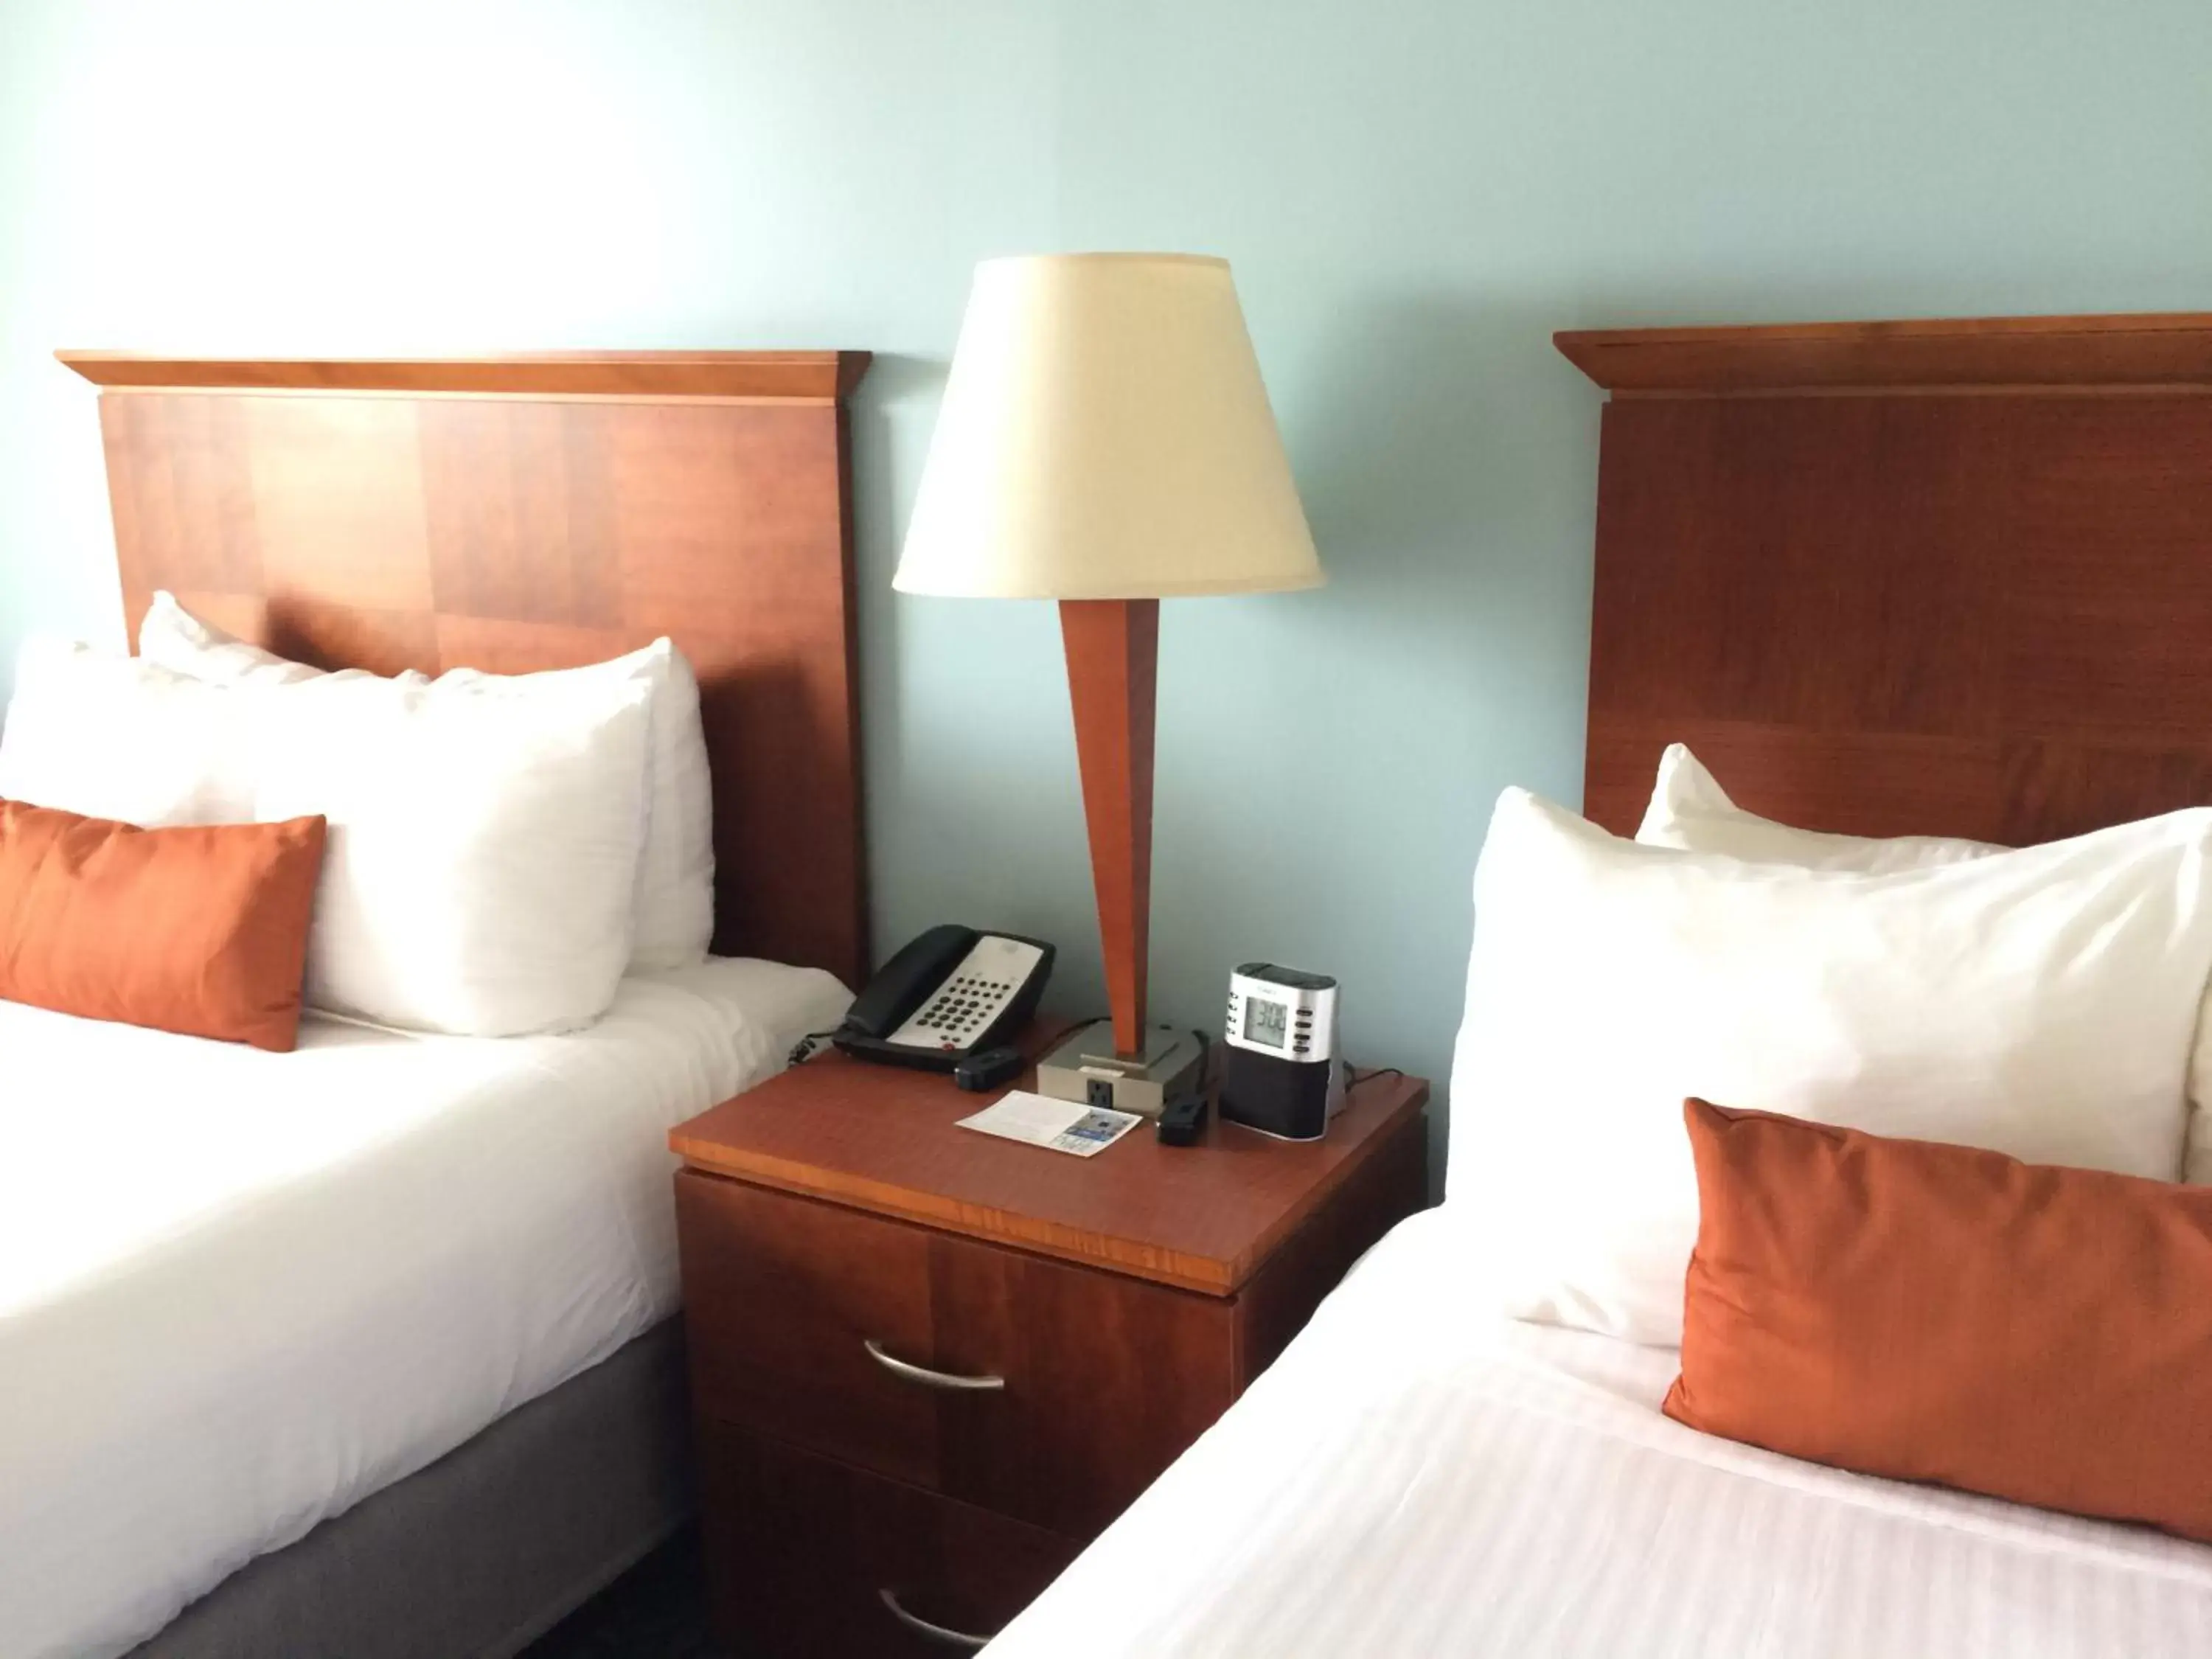 Bed, Room Photo in Hotel Tybee